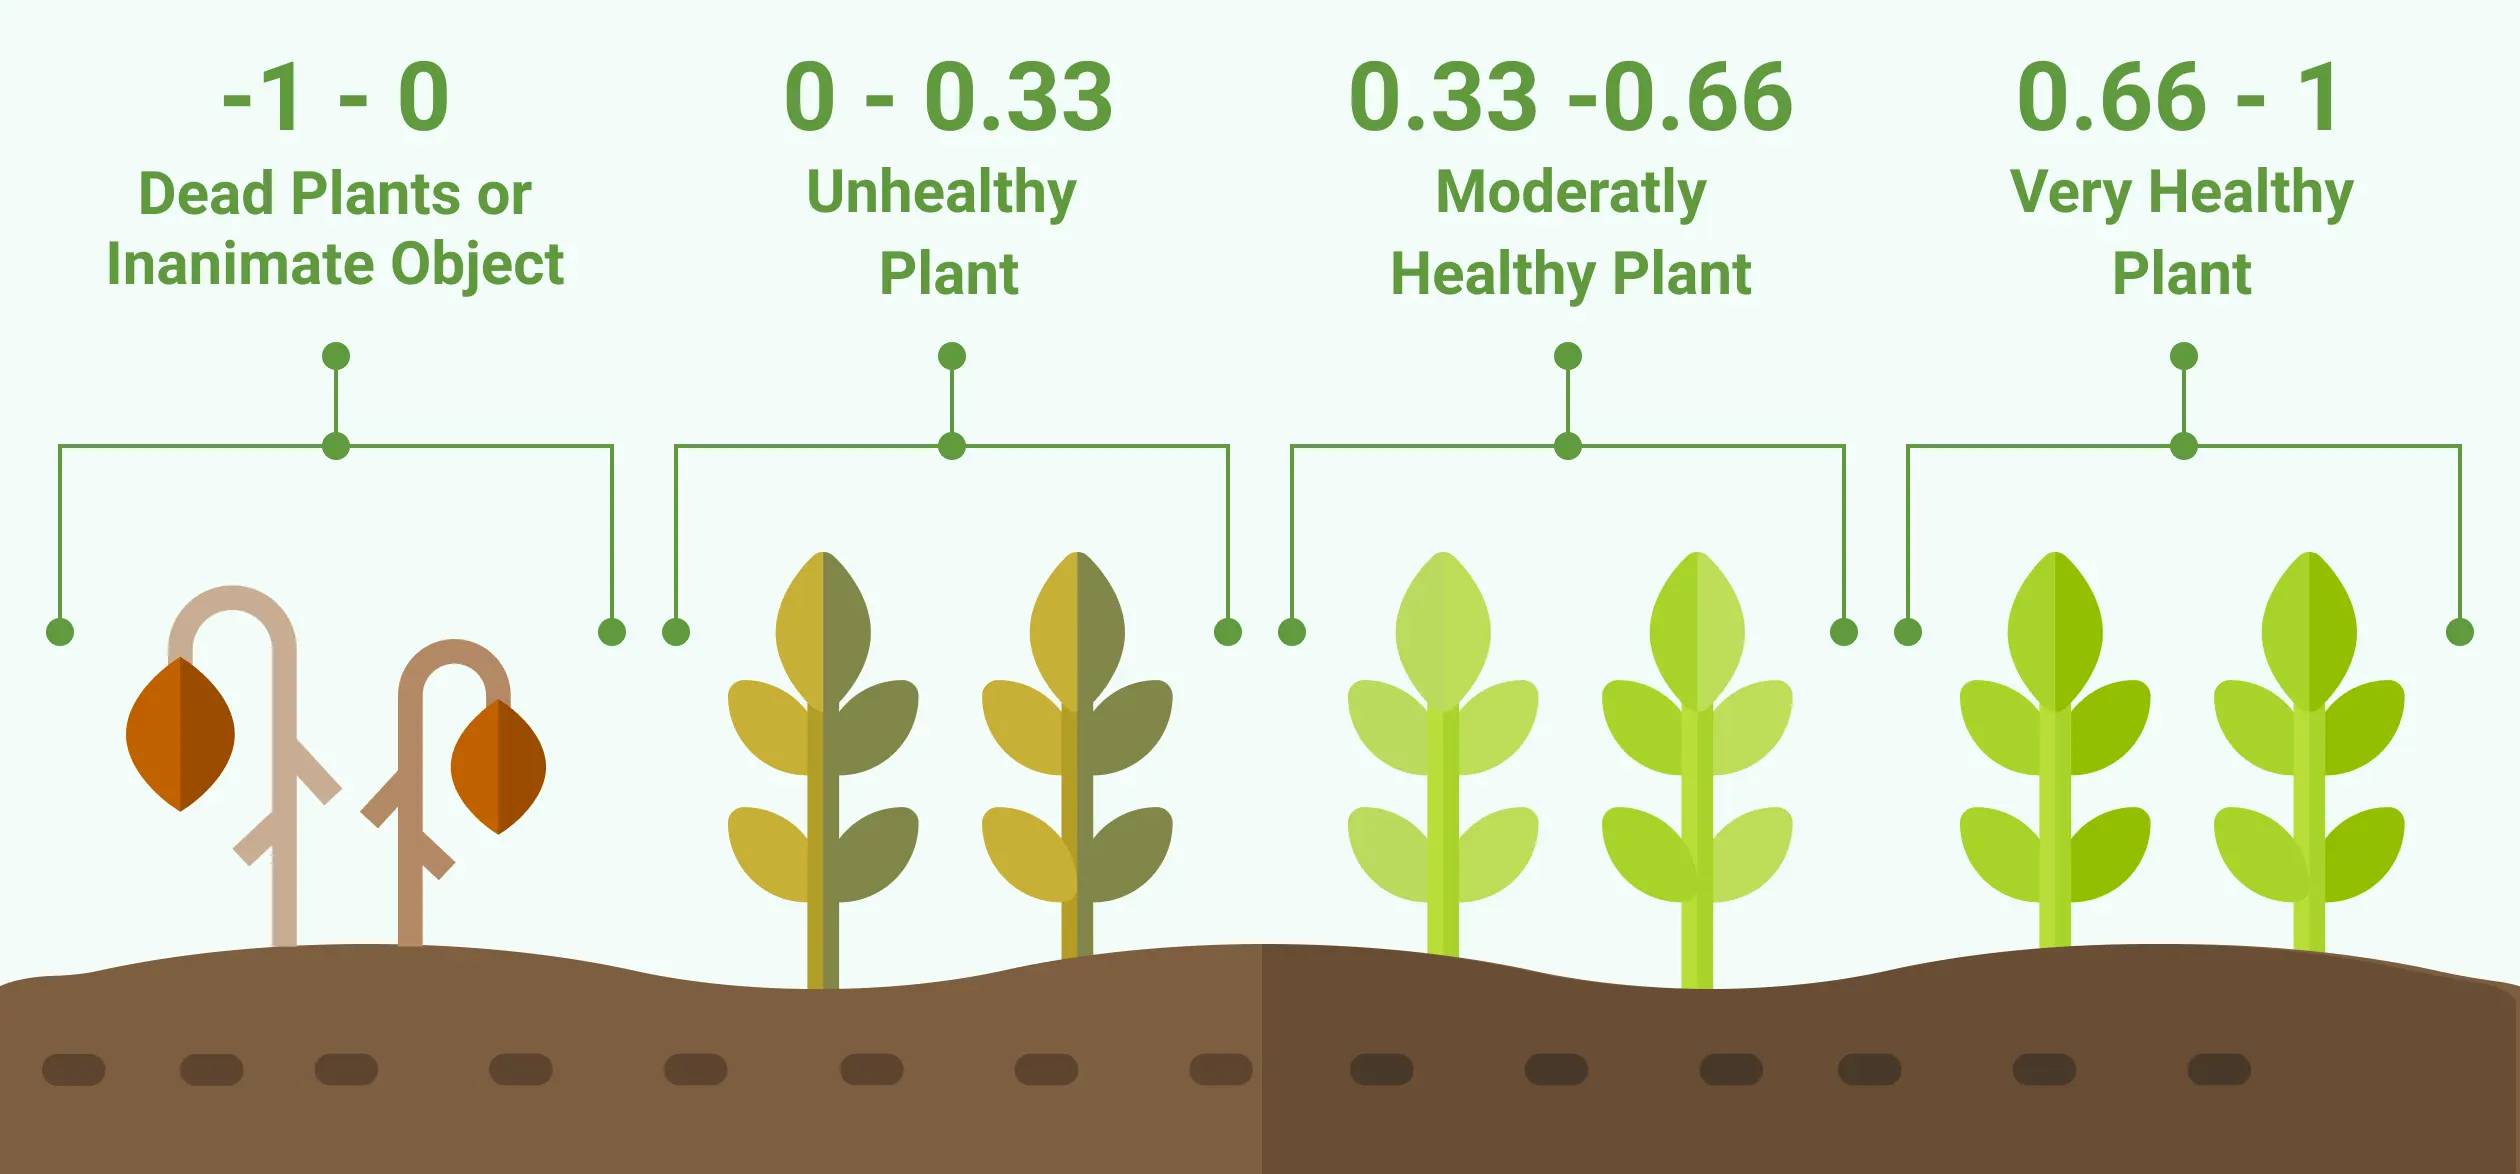 vegetation index infographic 3